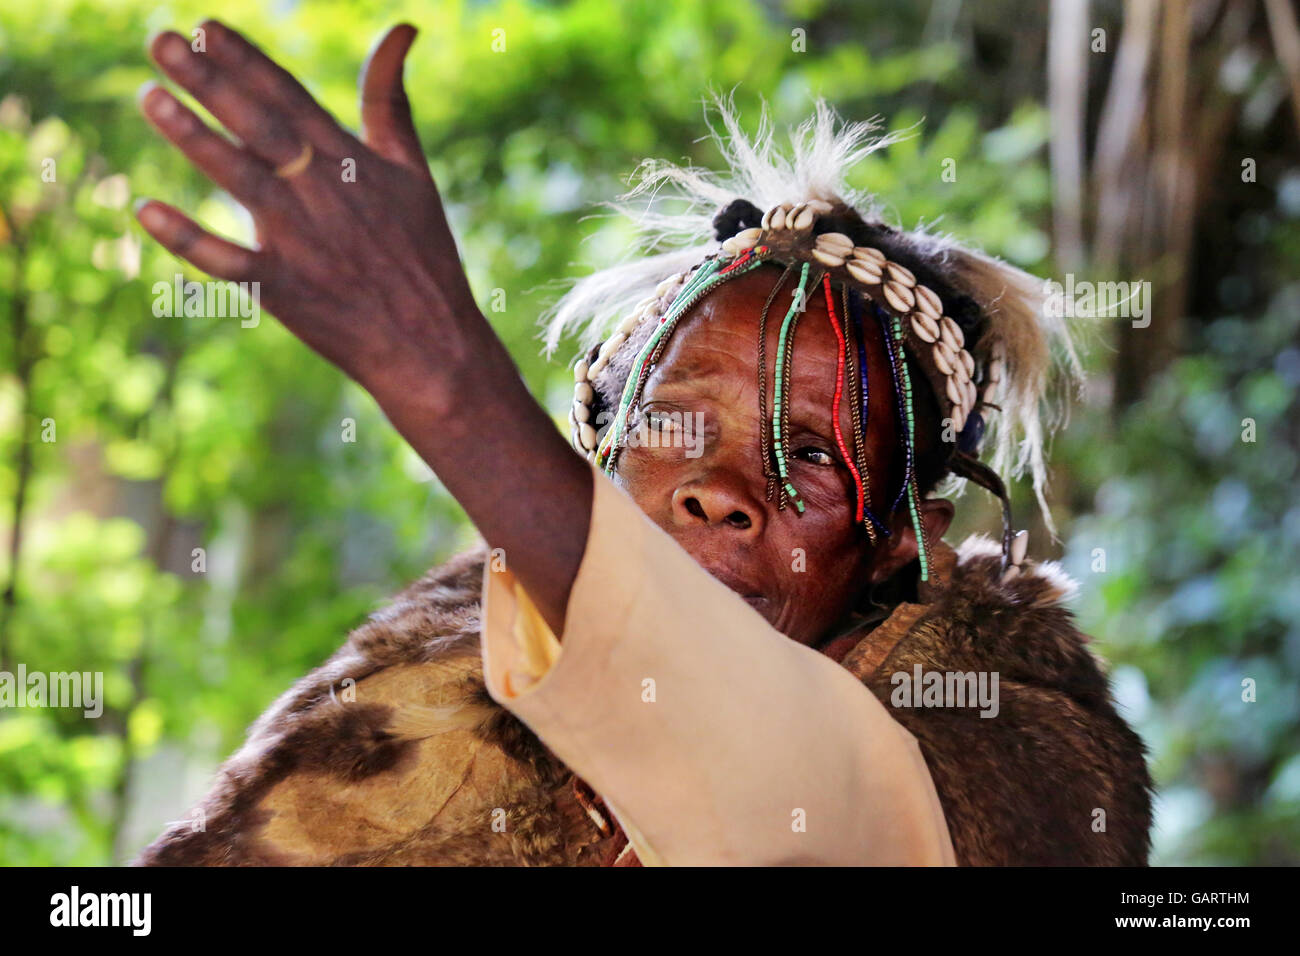 Professional circumciser tuttora praticano mutilazioni genitali femminili (MGF) nel suo tradizionale costume di circoncisione. Nakuru, Kenya, Africa Foto Stock